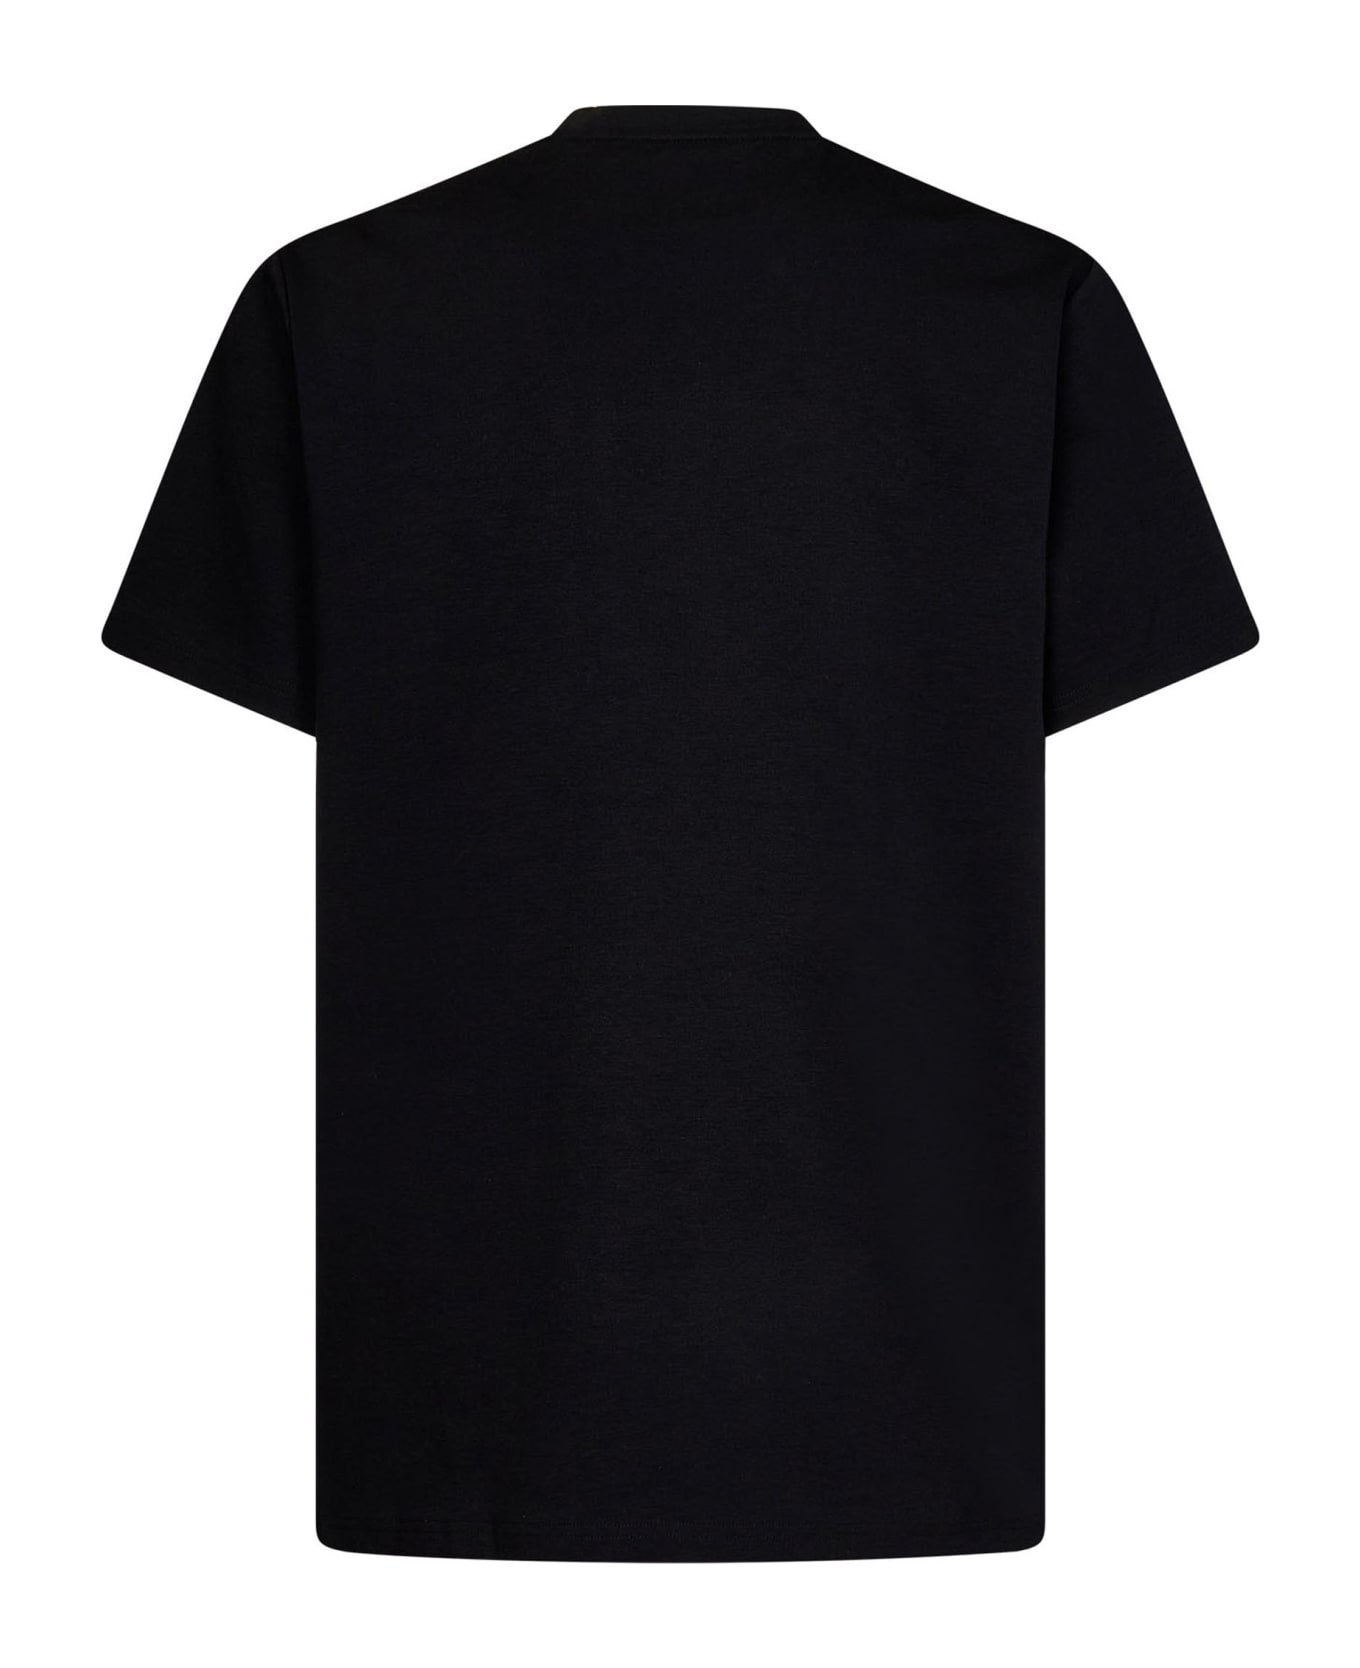 FourTwoFour on Fairfax T-shirt - Black シャツ